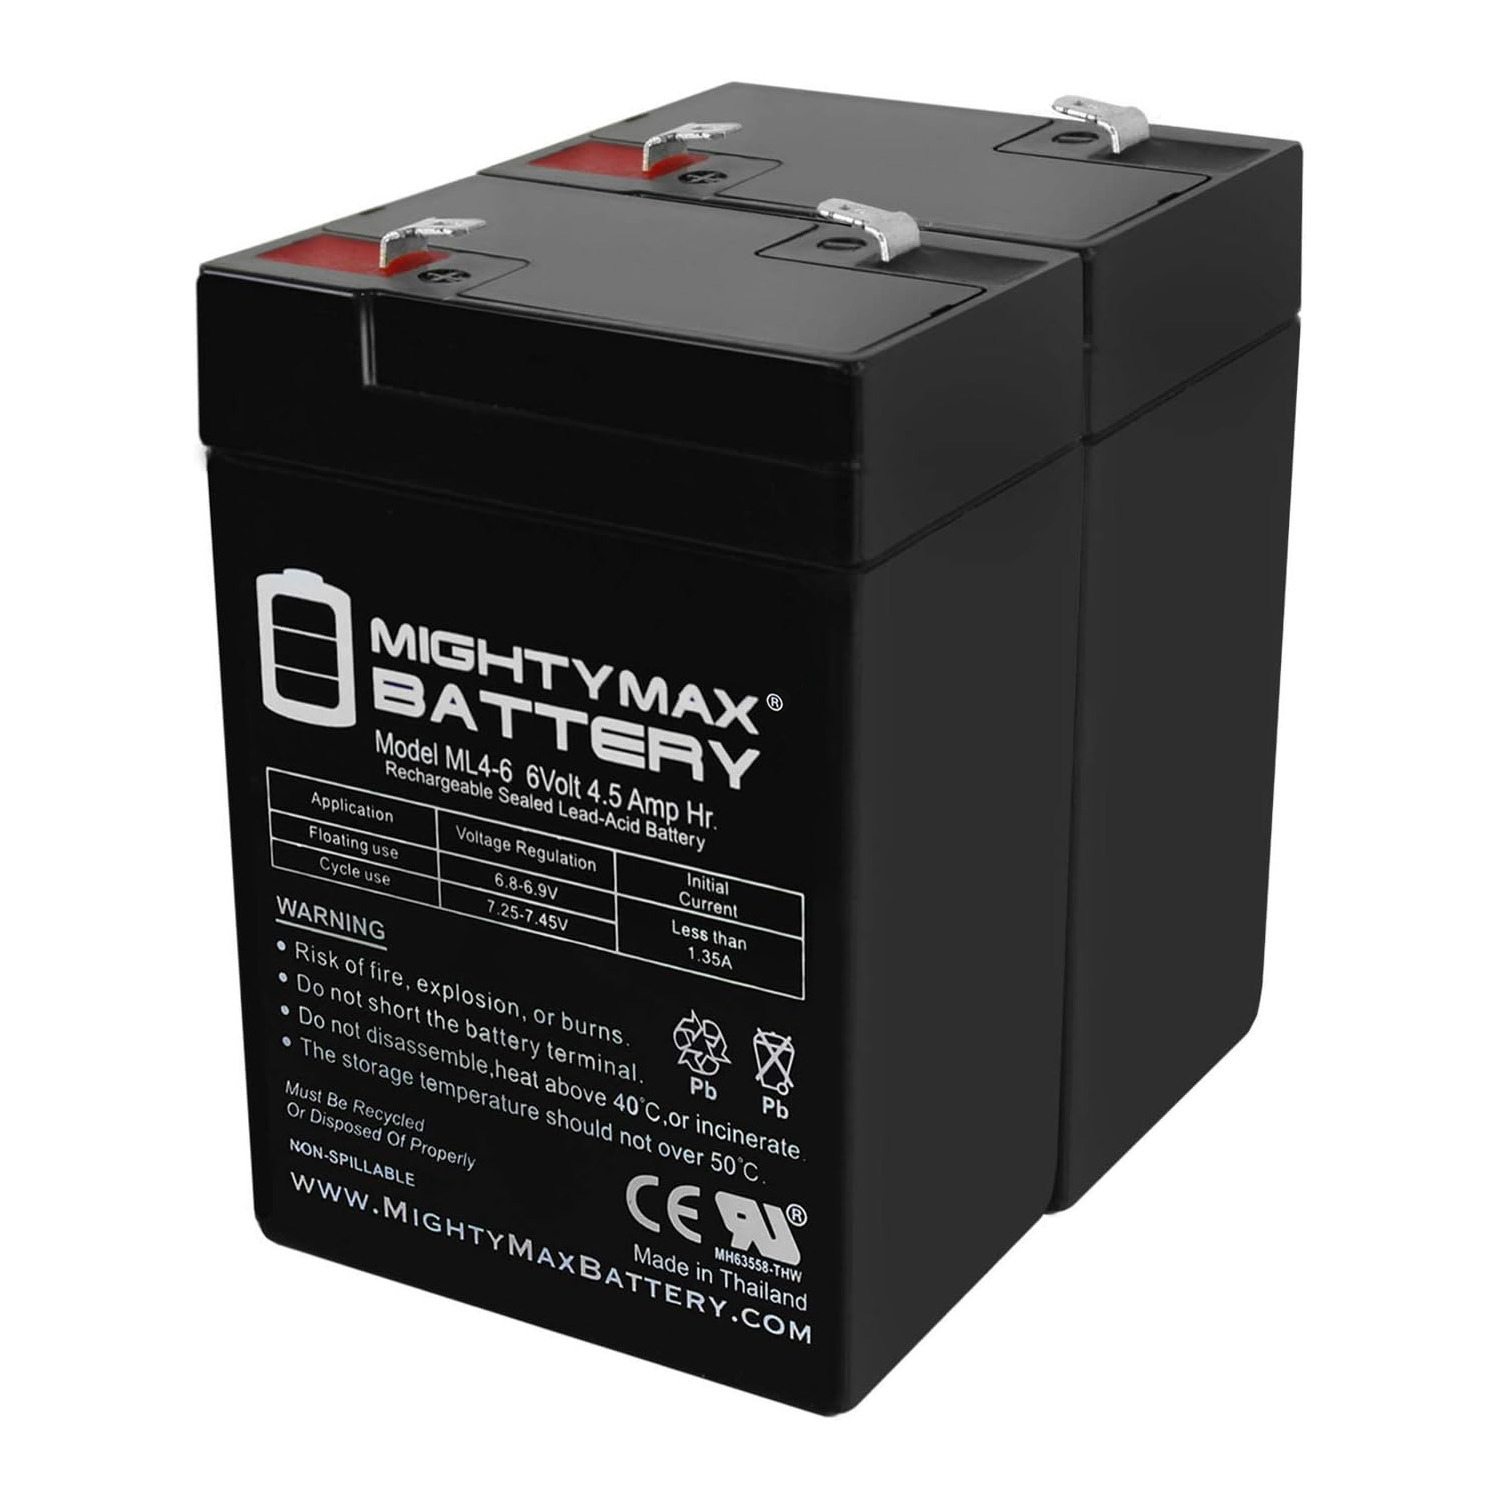 6V 4.5AH SLA Replacement Battery for Emergi-Lite Pro - 2 Pack